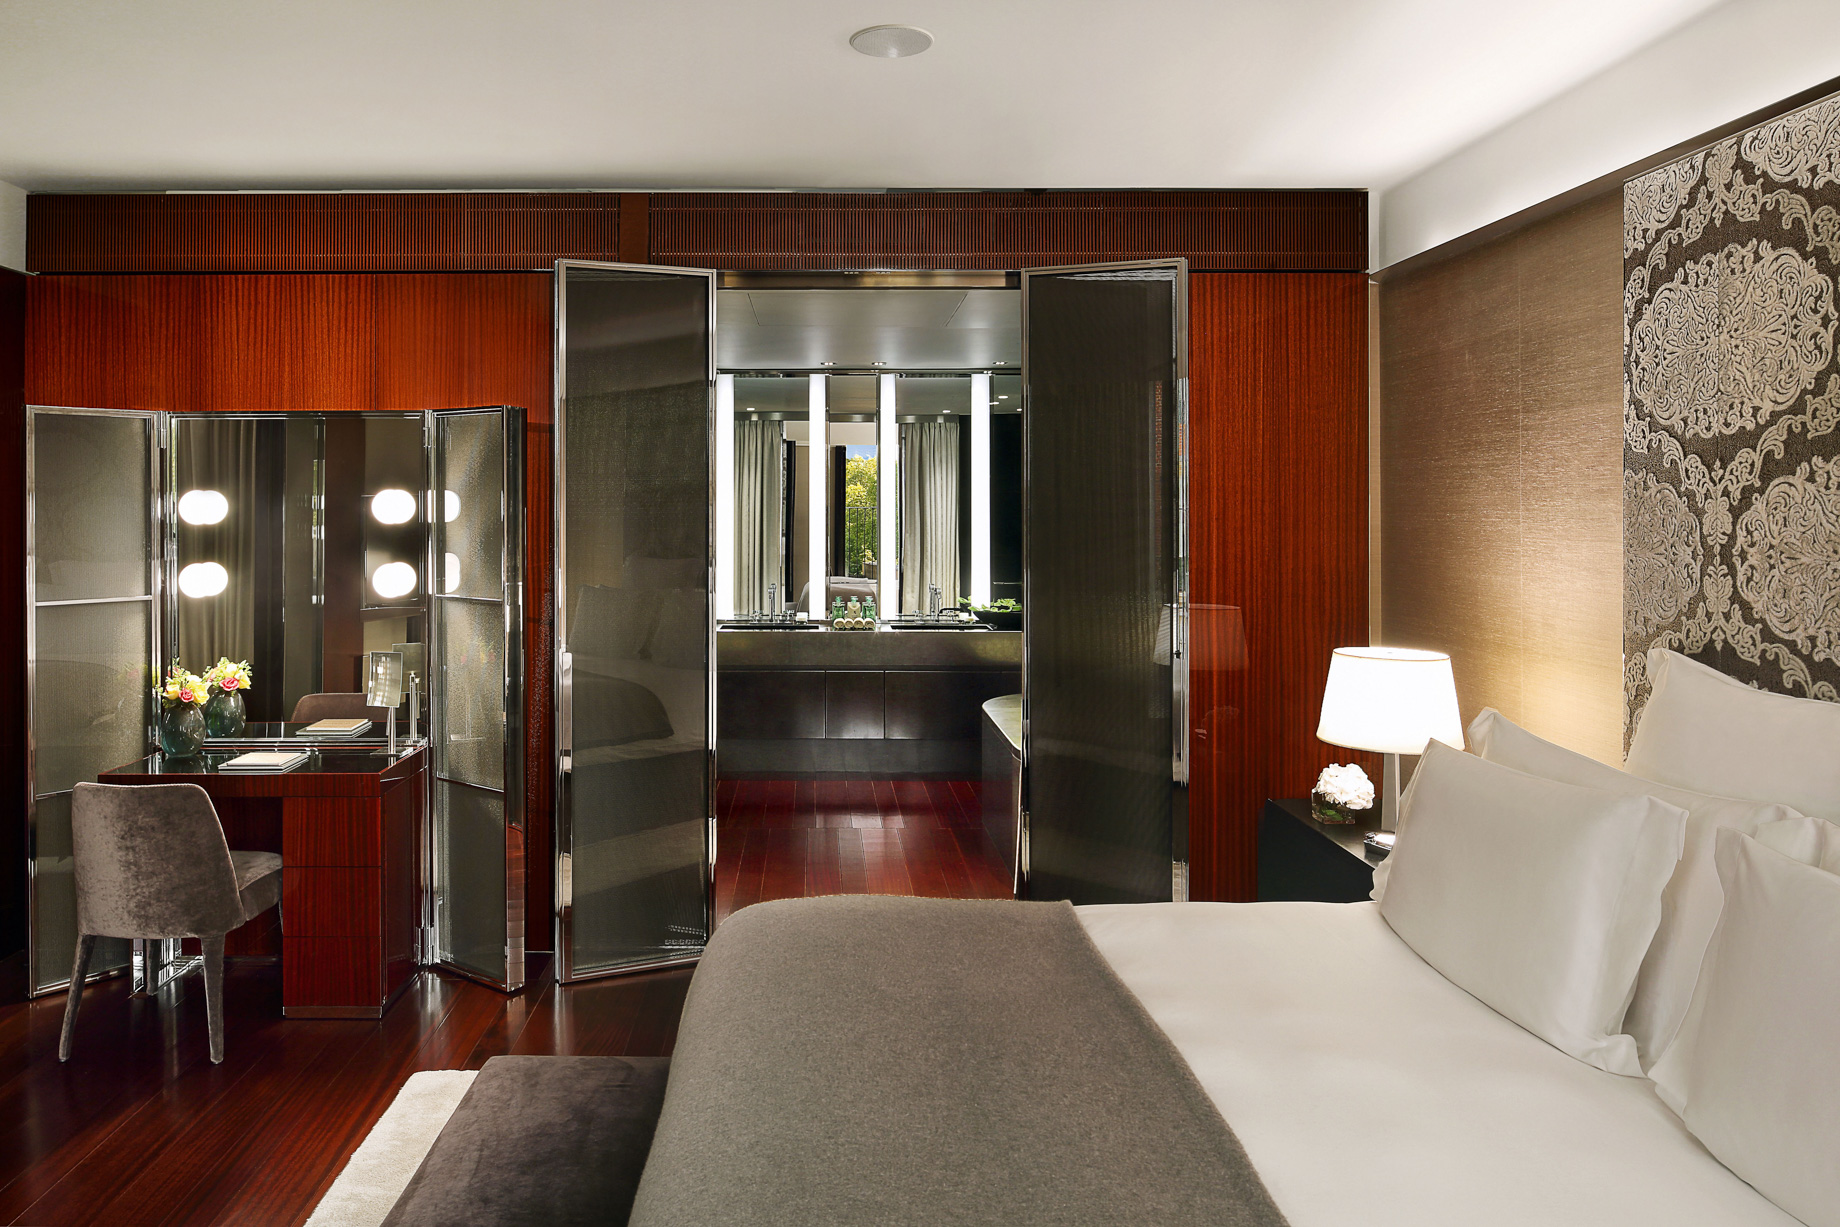 Bvlgari Hotel London – Knightsbridge, London, UK – Bvlgari Suite Bedroom and Bathroom